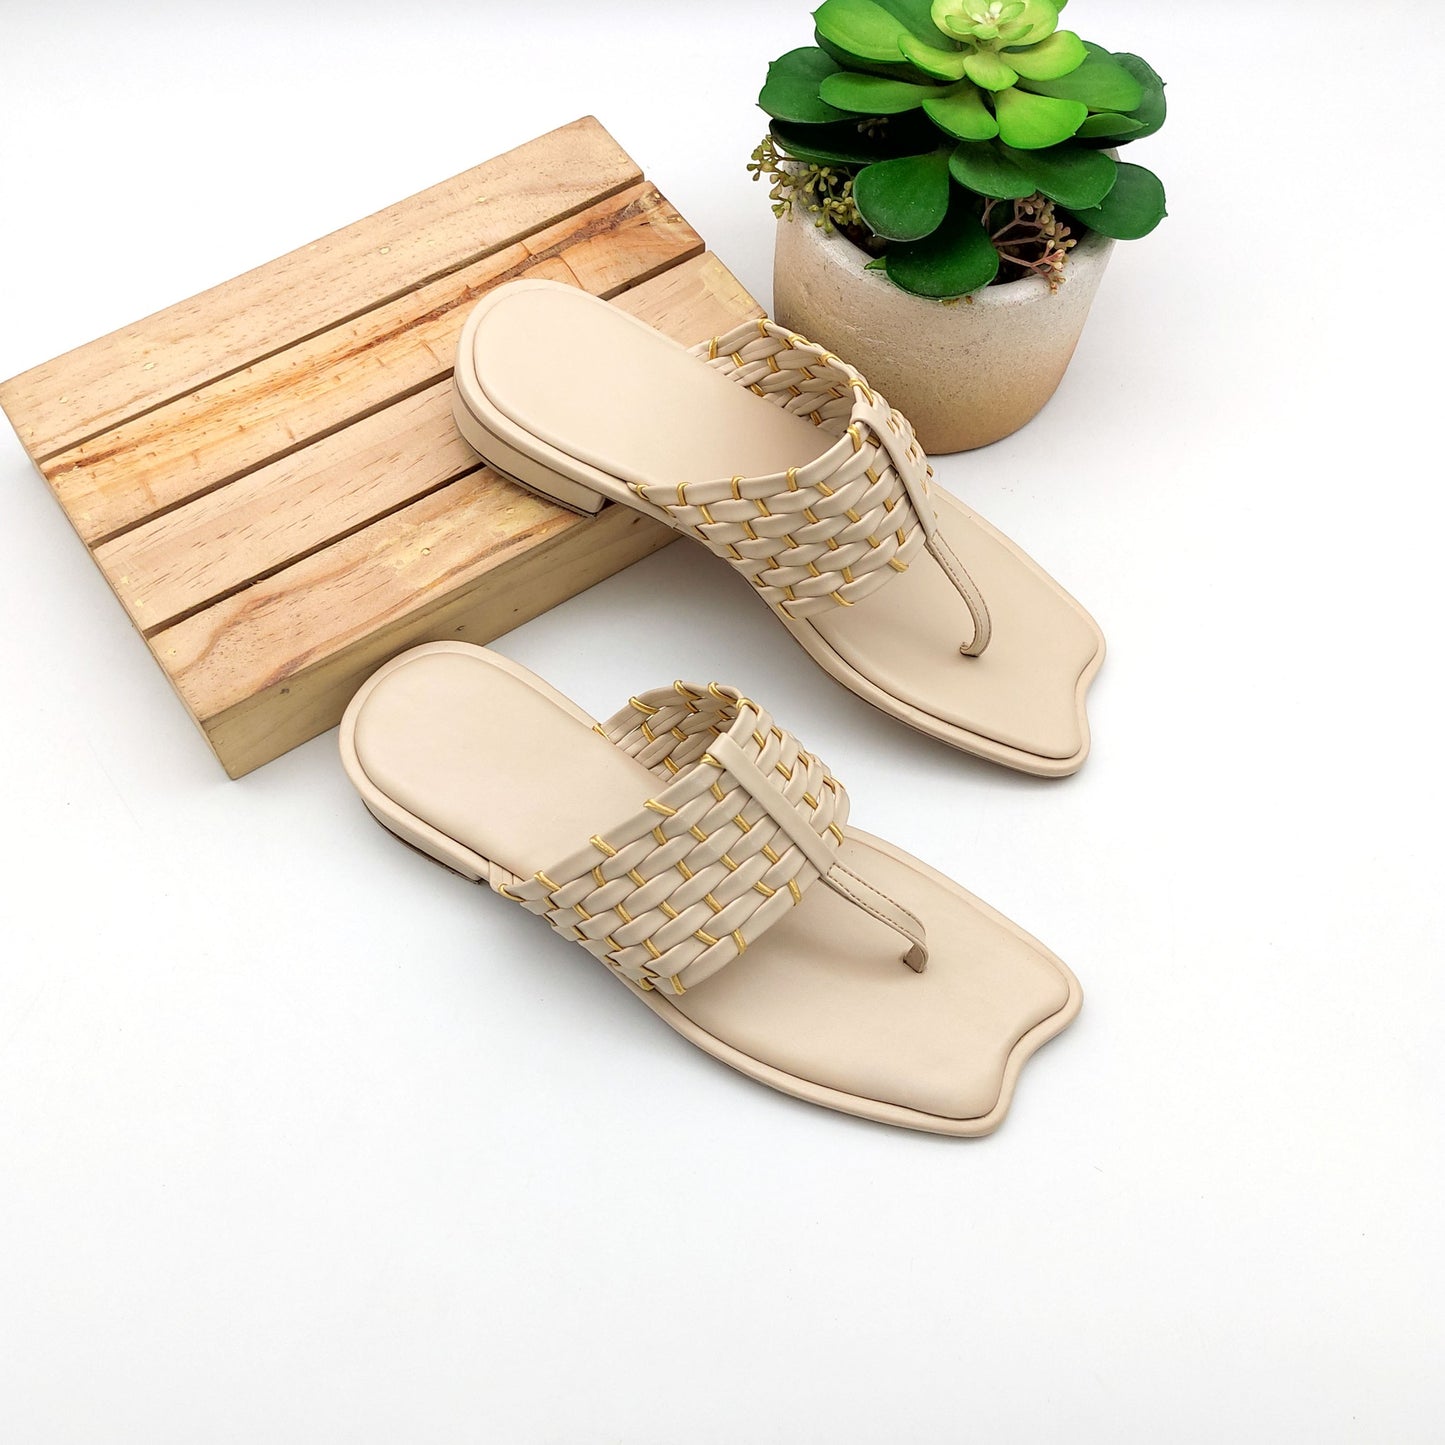 Micole - Tabitha 774 - Half-Inch Woven Vegan Leather T-Strap Odd Shape Toe Block Heels